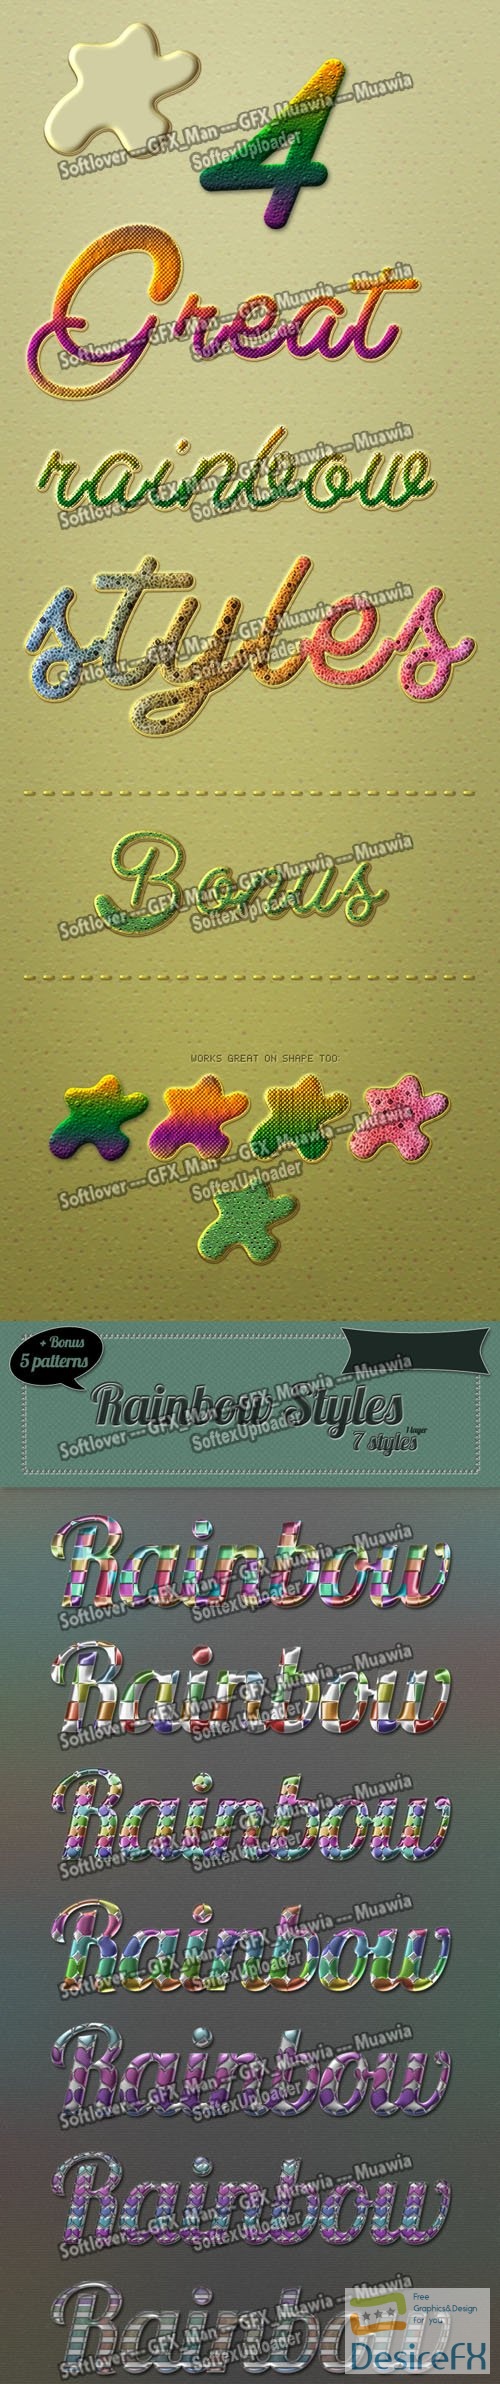 10+ Rainbow Photoshop Styles Collection